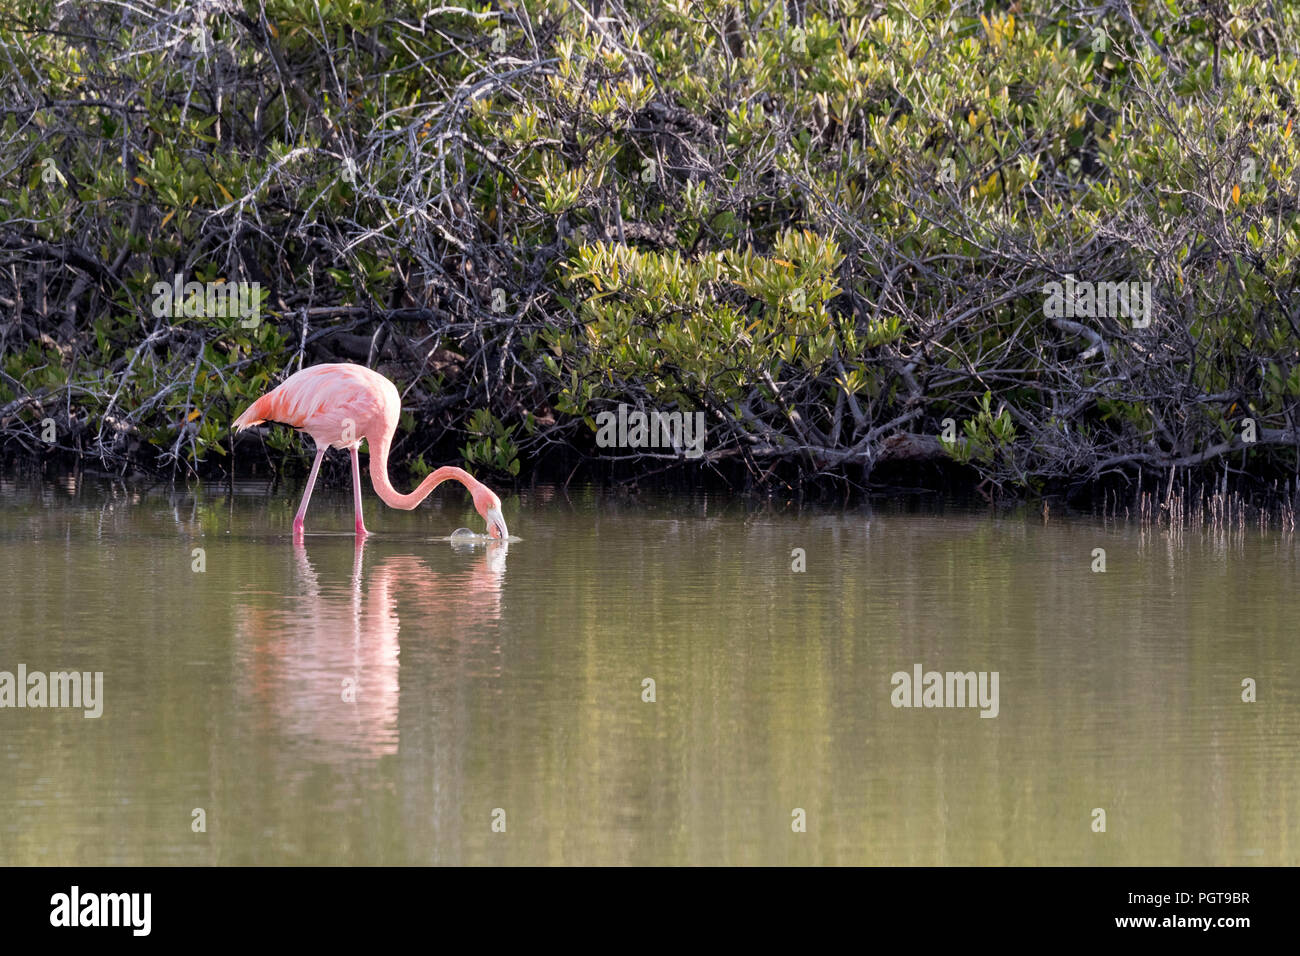 Mehr Flamingo, Phoenicopterus ruber, Nahrungssuche in Salzwasser Lagune, Insel Floreana, Galapagos, Ecuador. Stockfoto